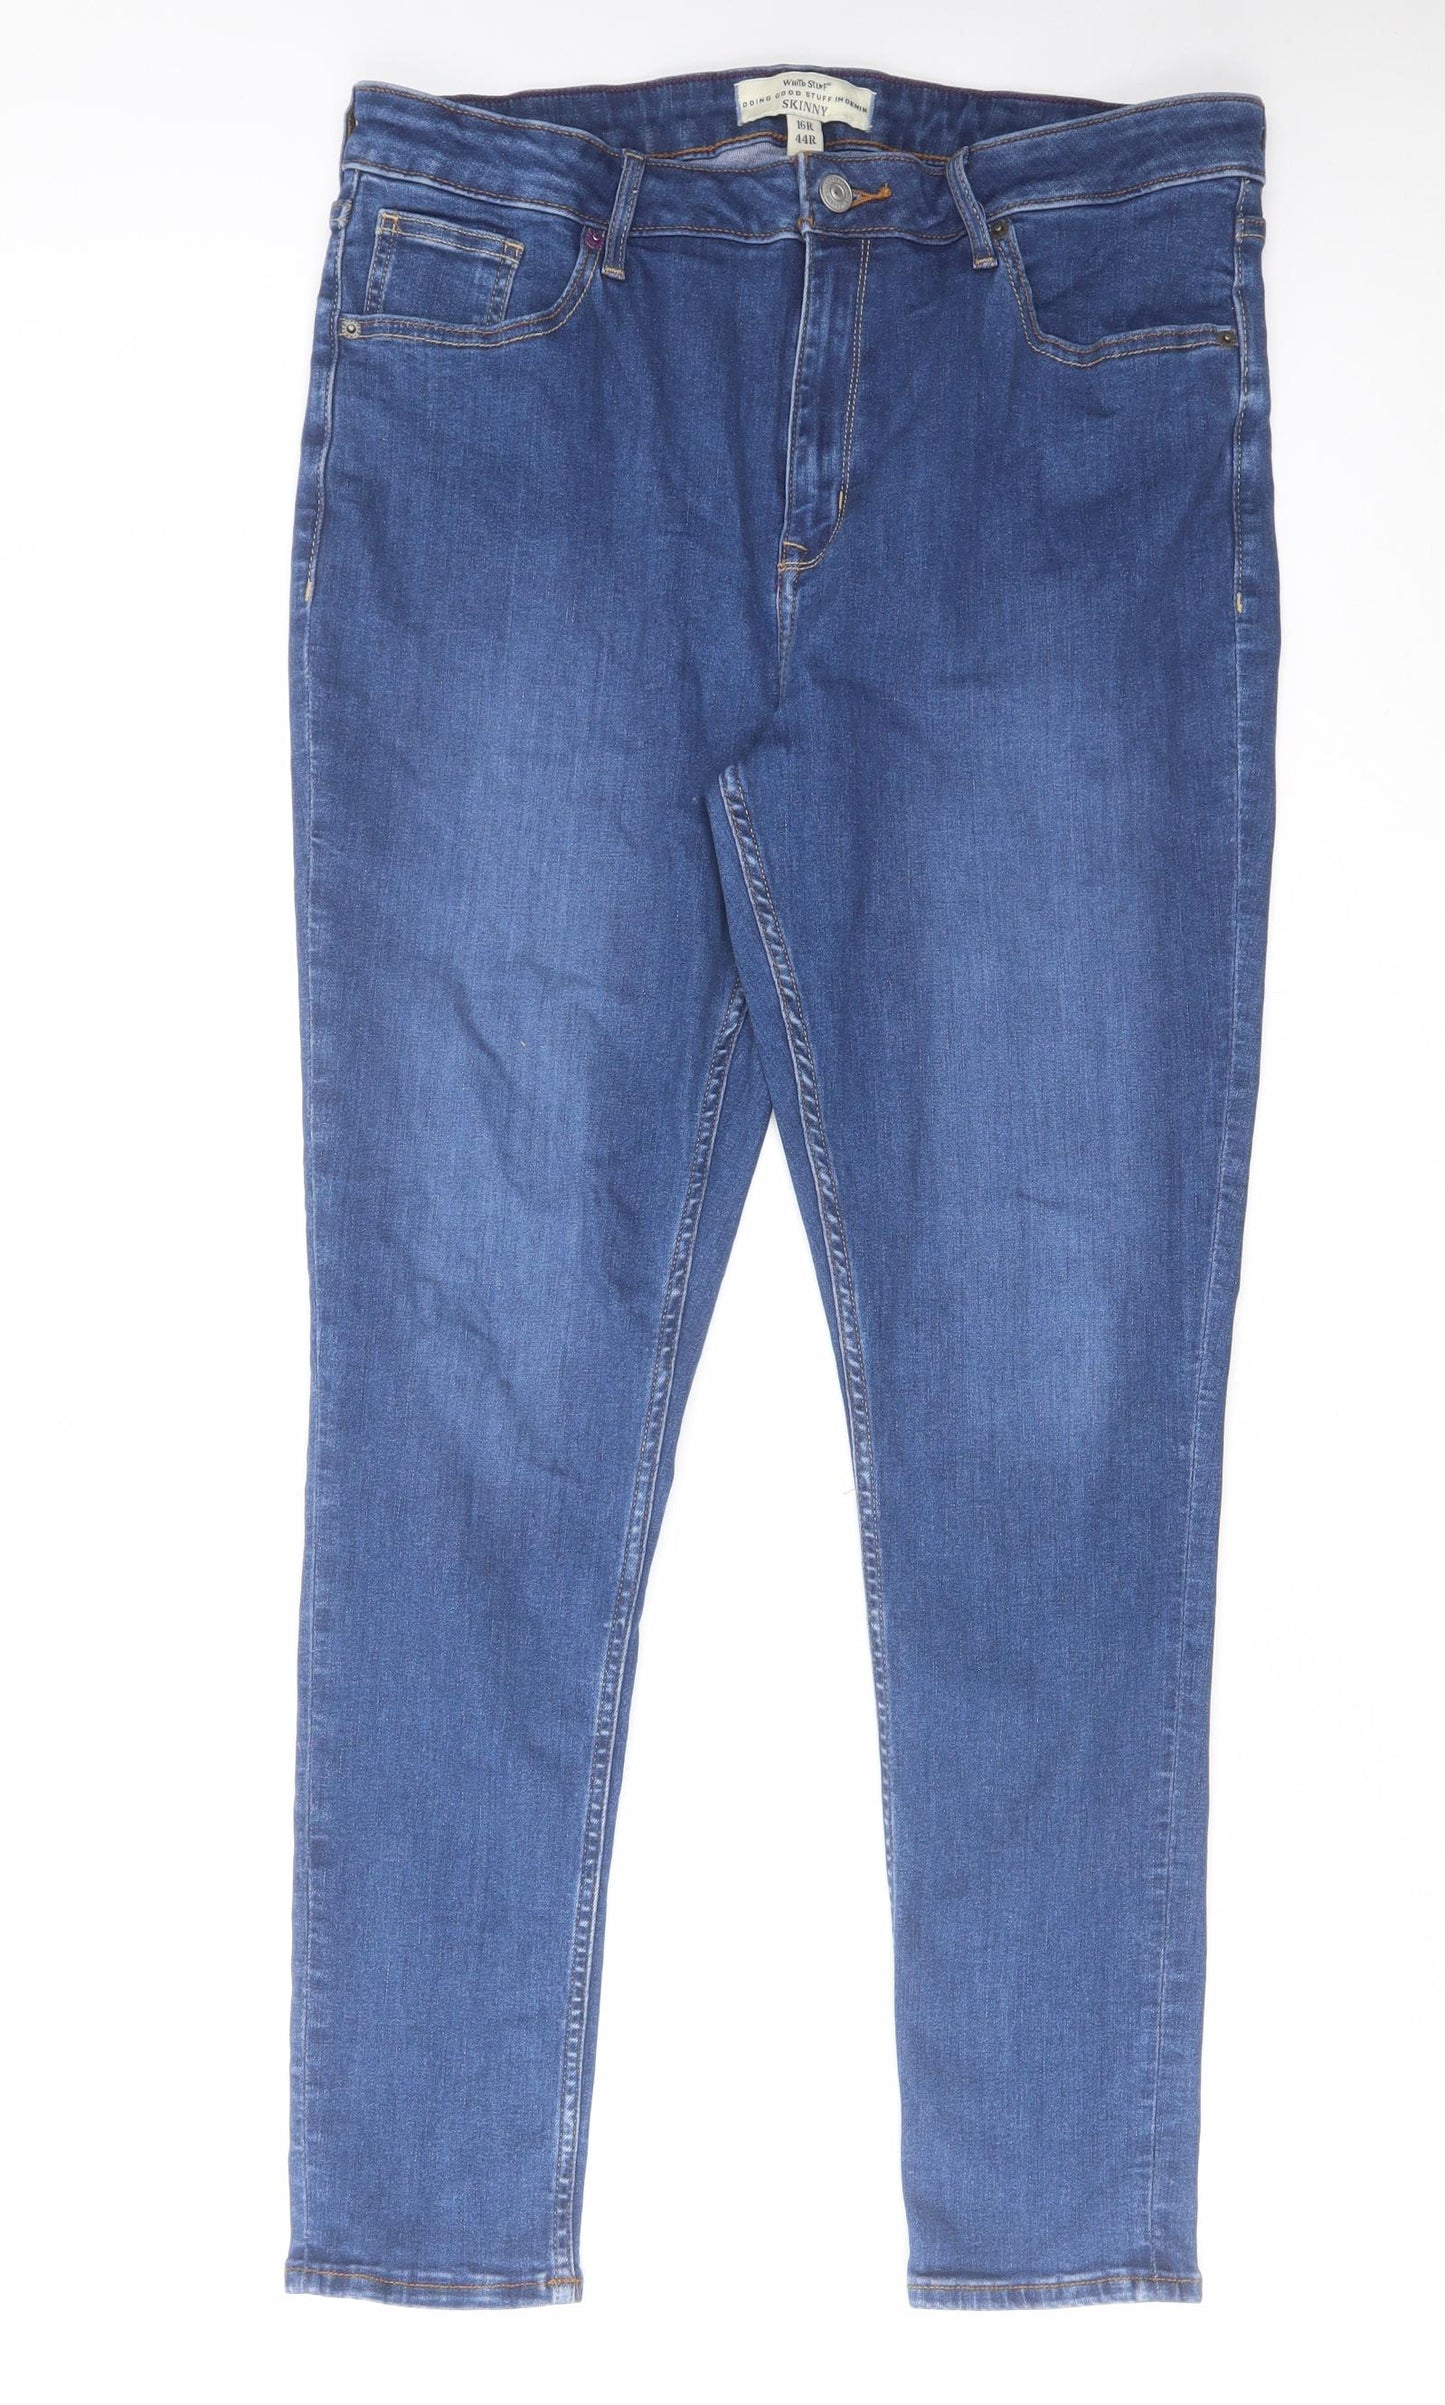 White Stuff Womens Blue Cotton Skinny Jeans Size 16 L30 in Regular Zip